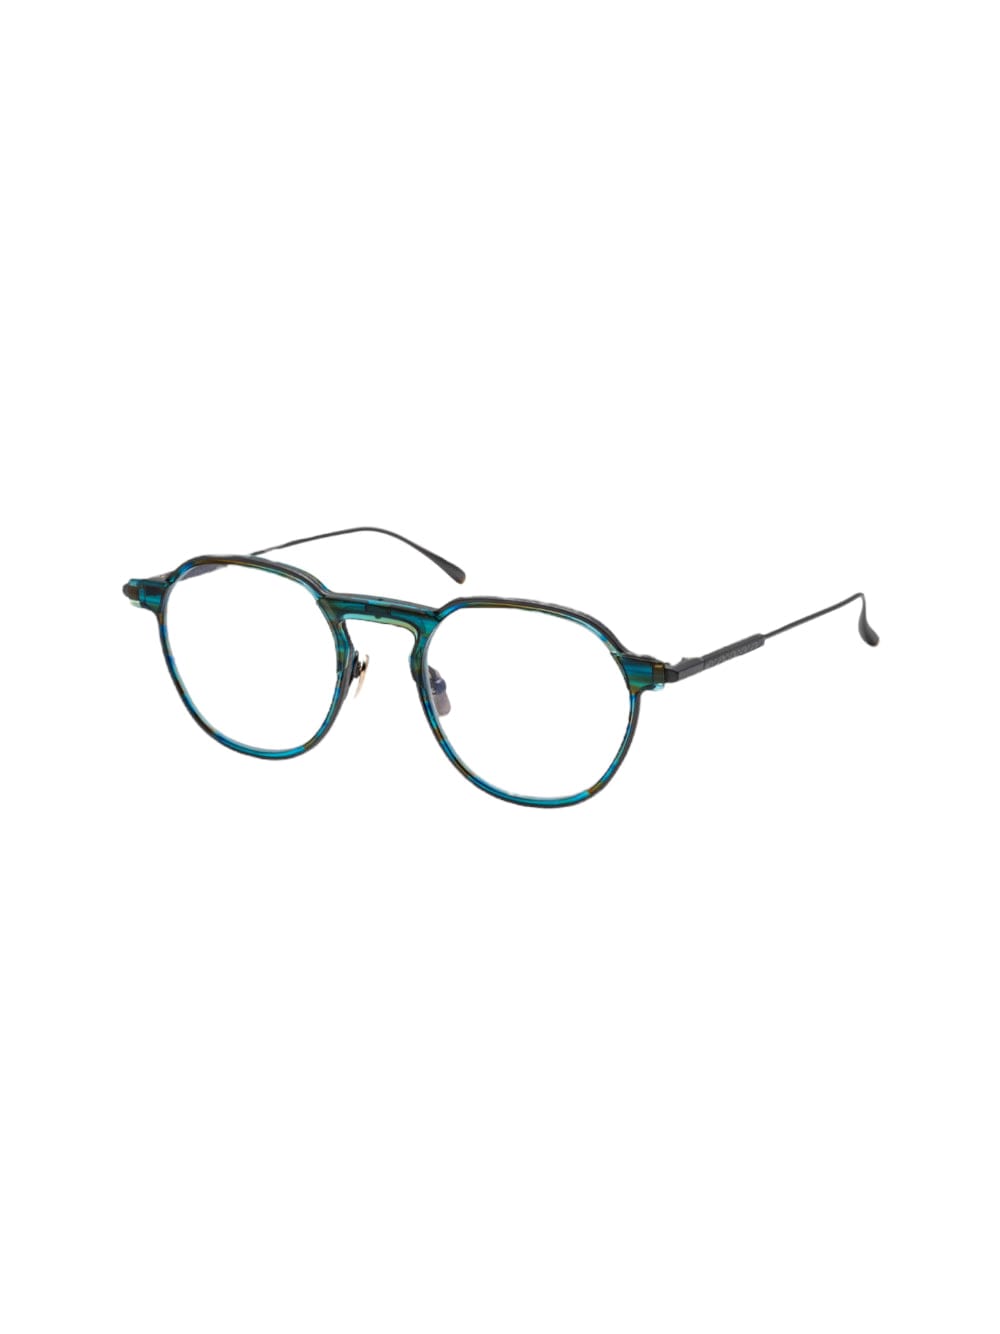 Masunaga Aster - Turquoise Glasses